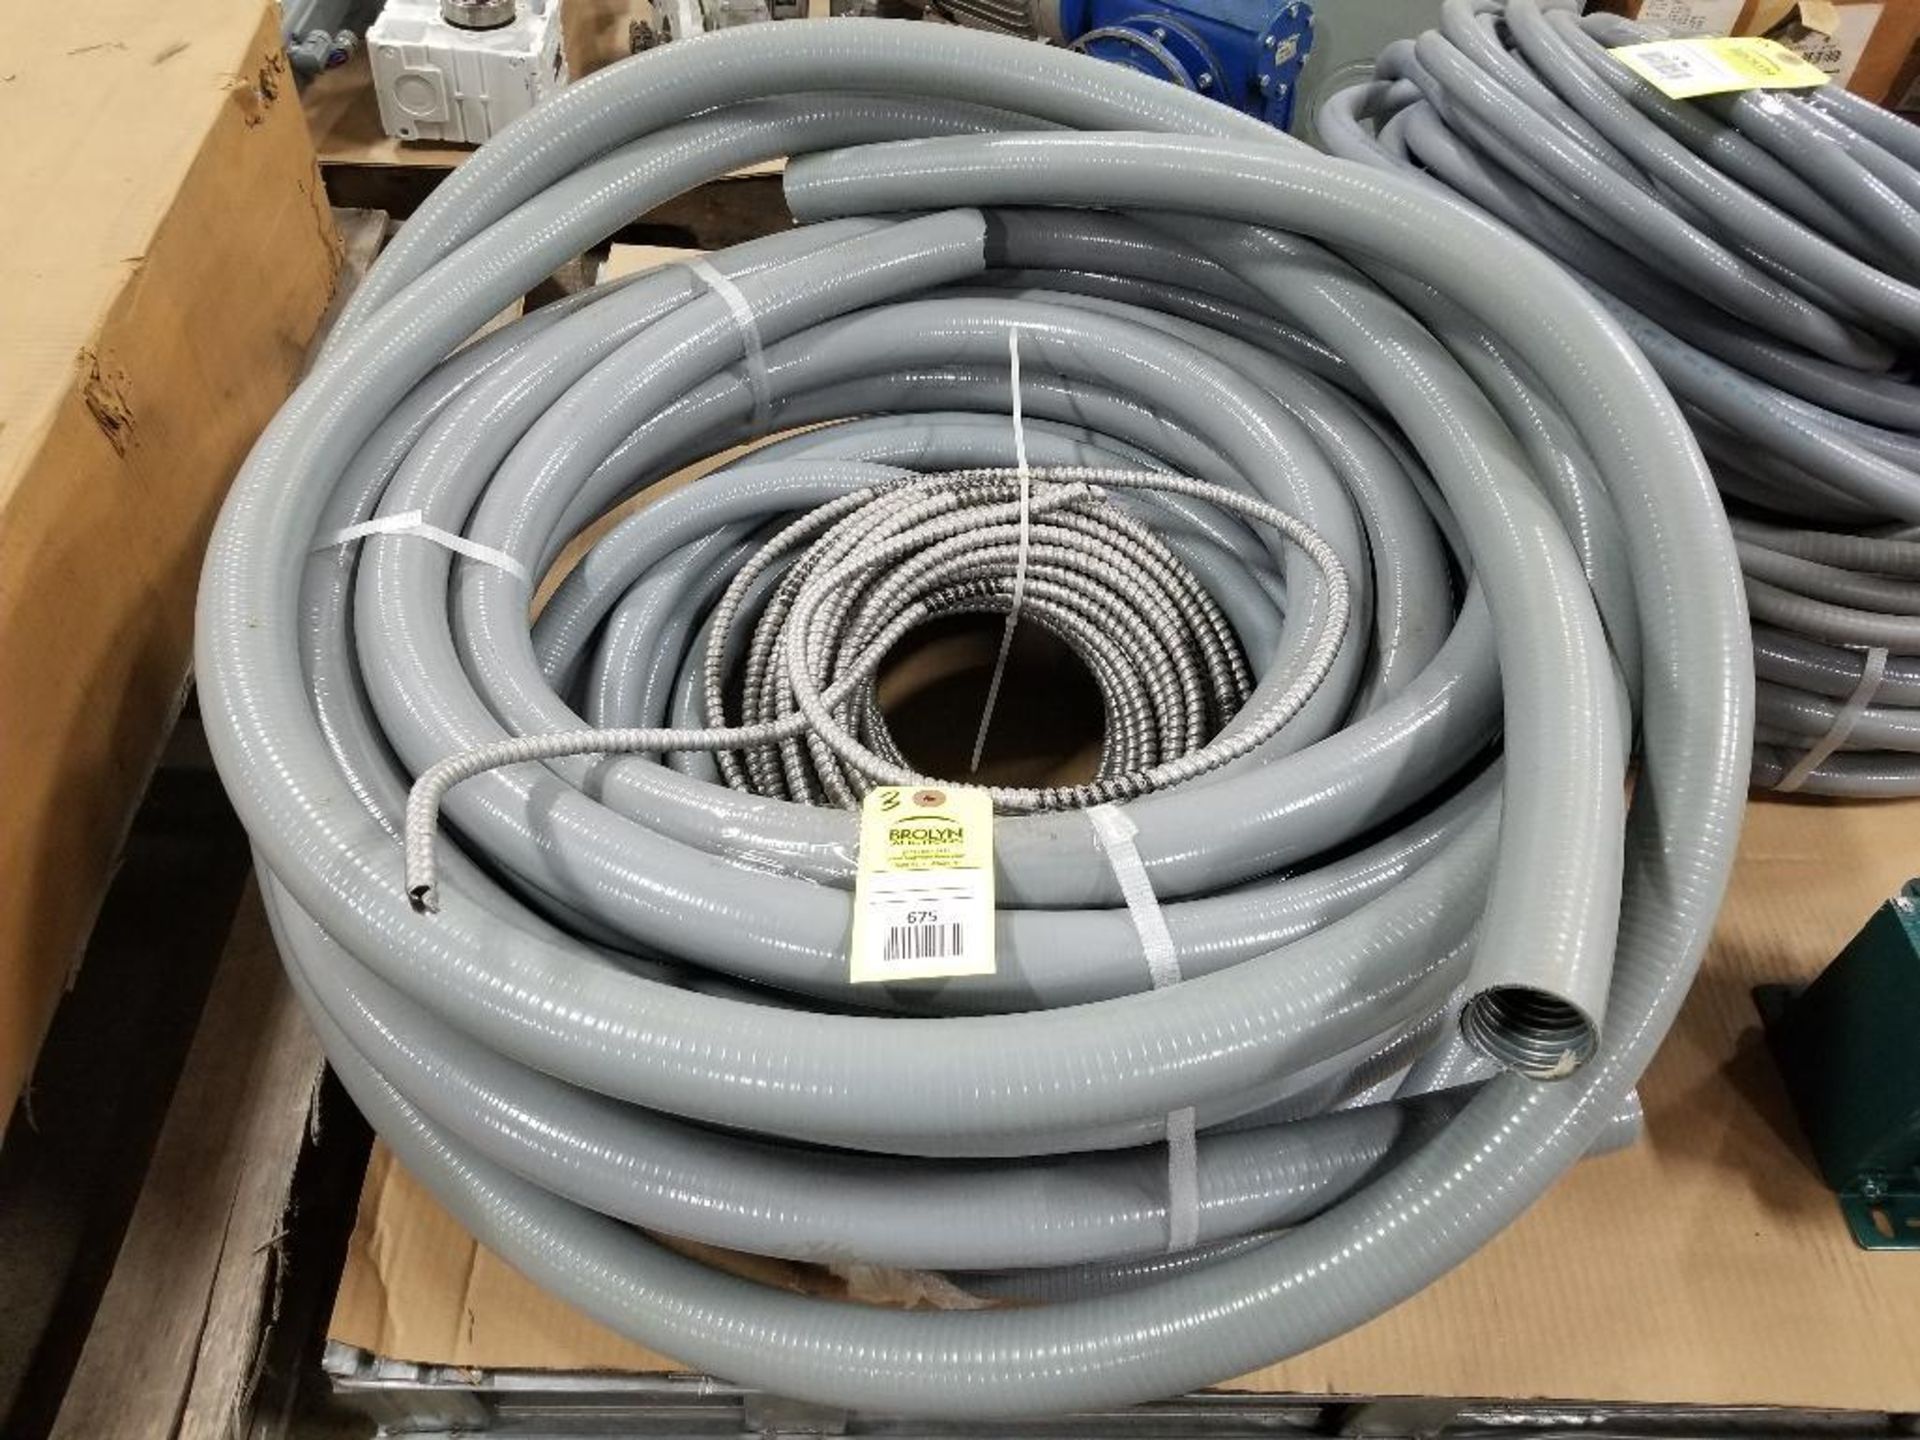 Assorted flexible conduit.